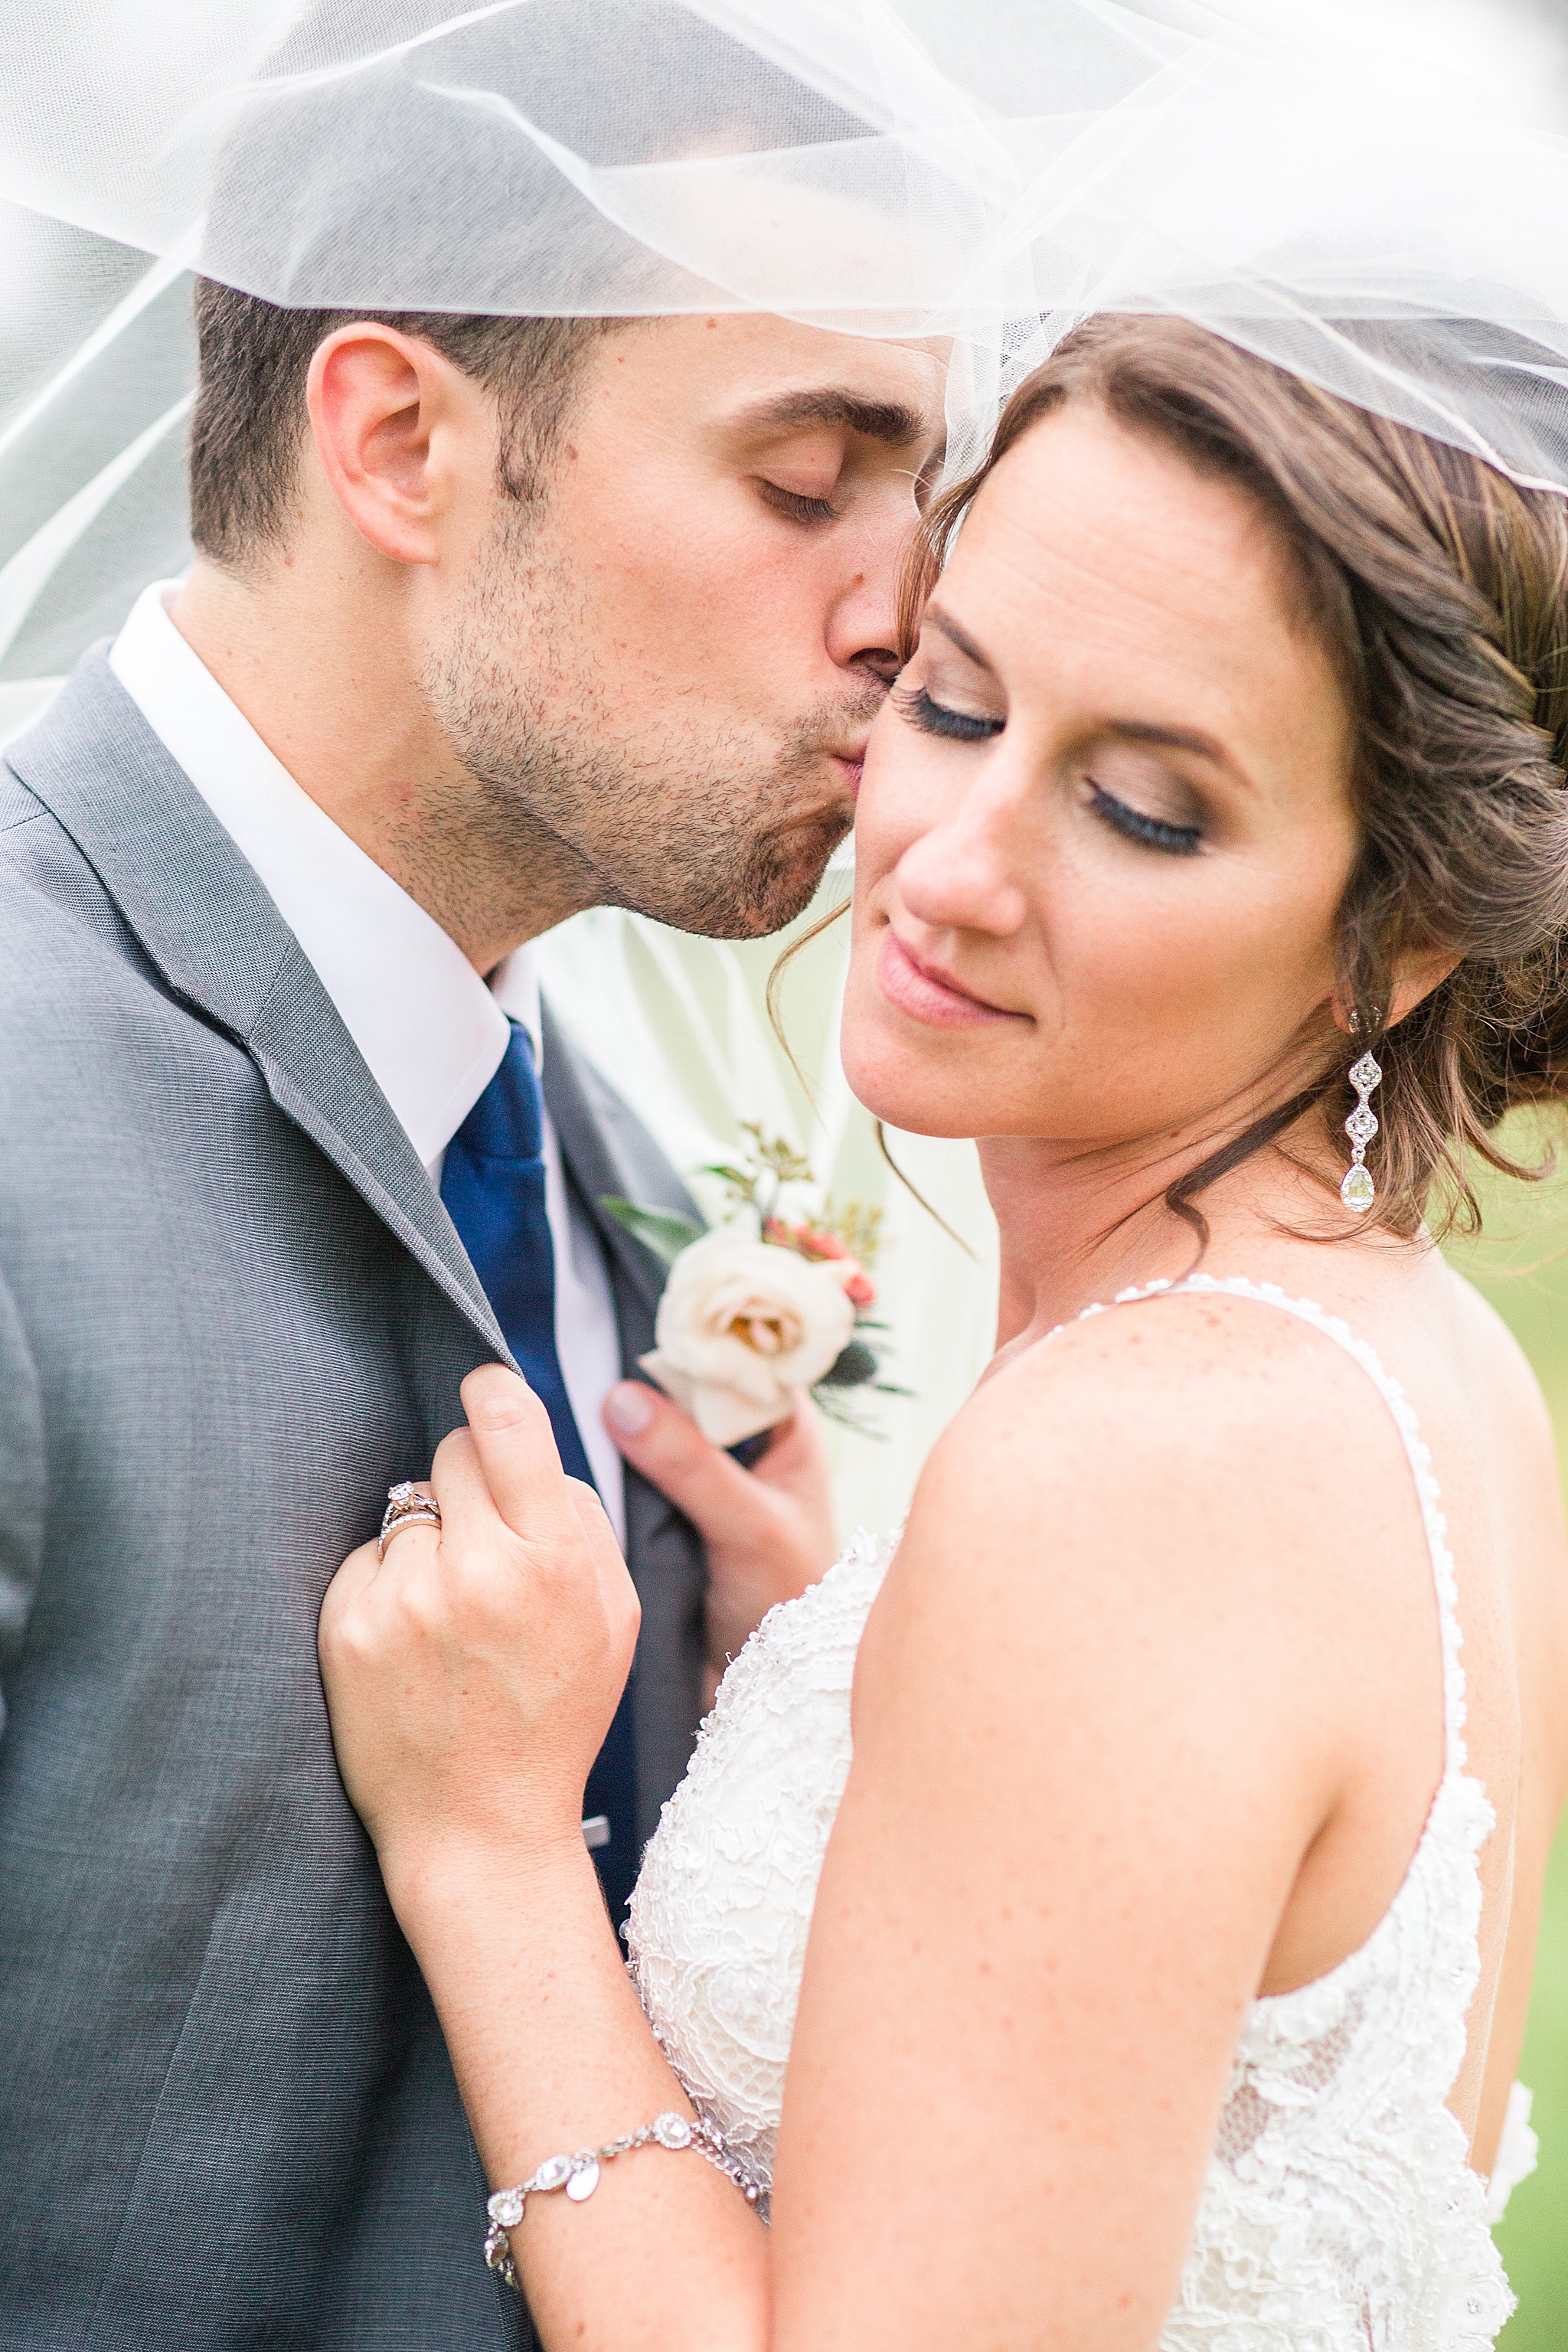 Maryland wedding photographer Alexandra Mandato Photography captures romantic newlywed portraits